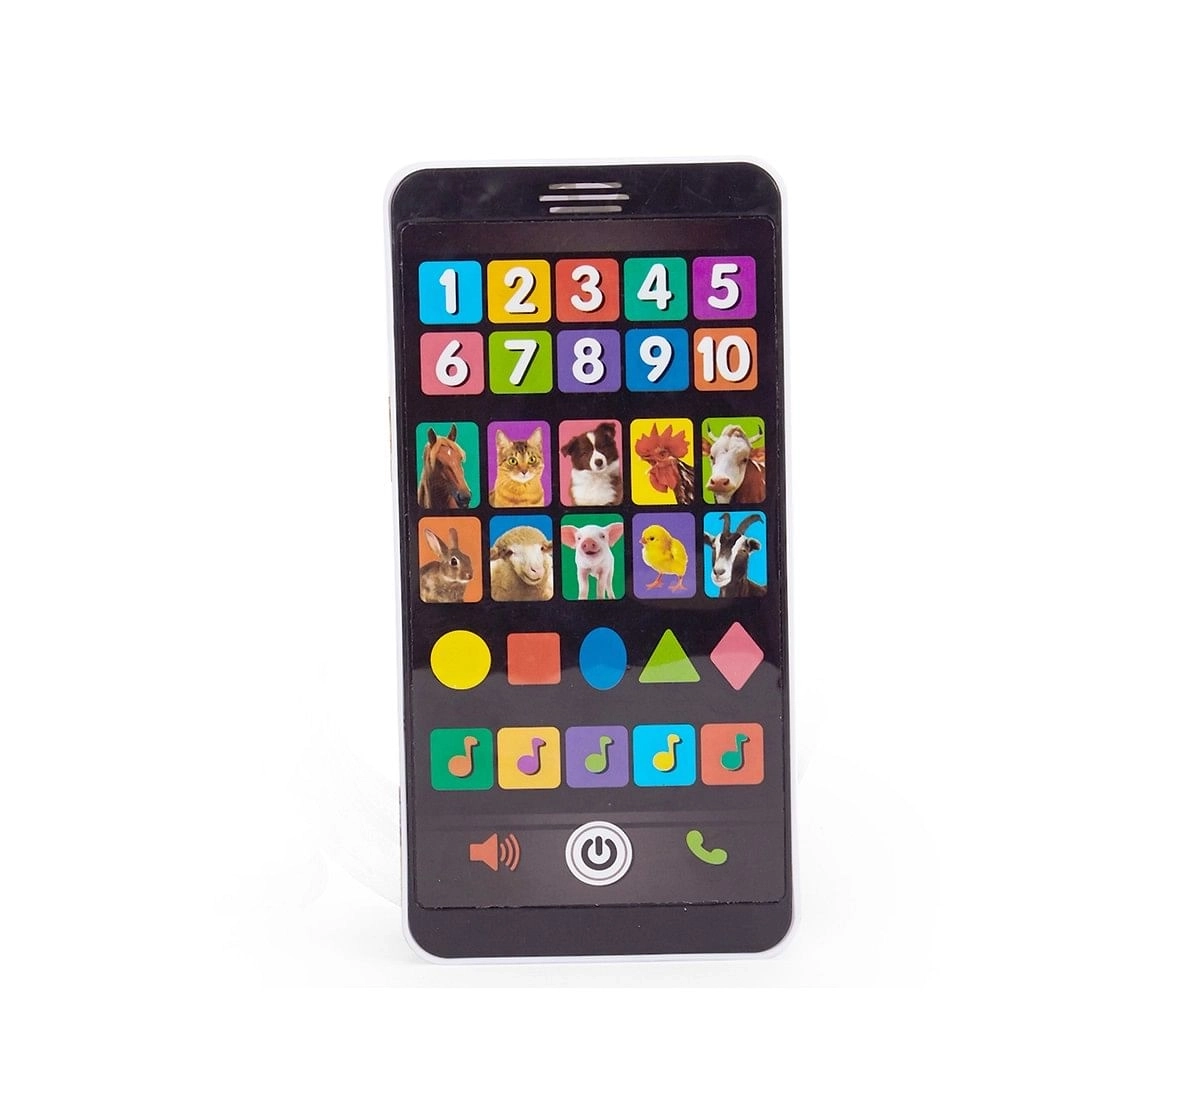 Comdaq AZ Baby Smartphone Learning Toy for Kids age 3Y+ (Black)